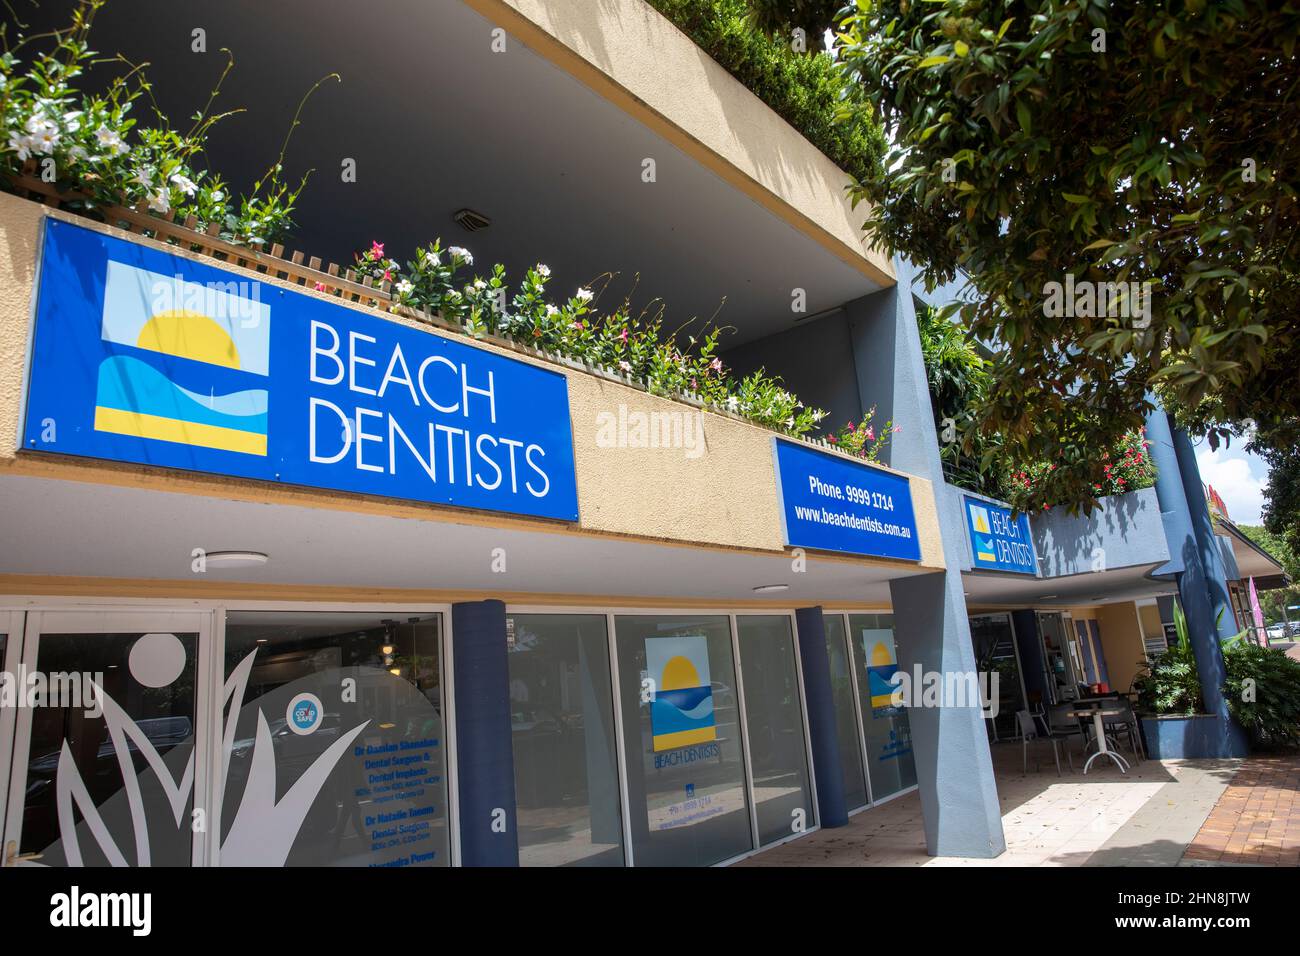 Sydney dental practice named beach dentists, located in Sydney suburb of Newport Beach,NSW,Australia Stock Photo